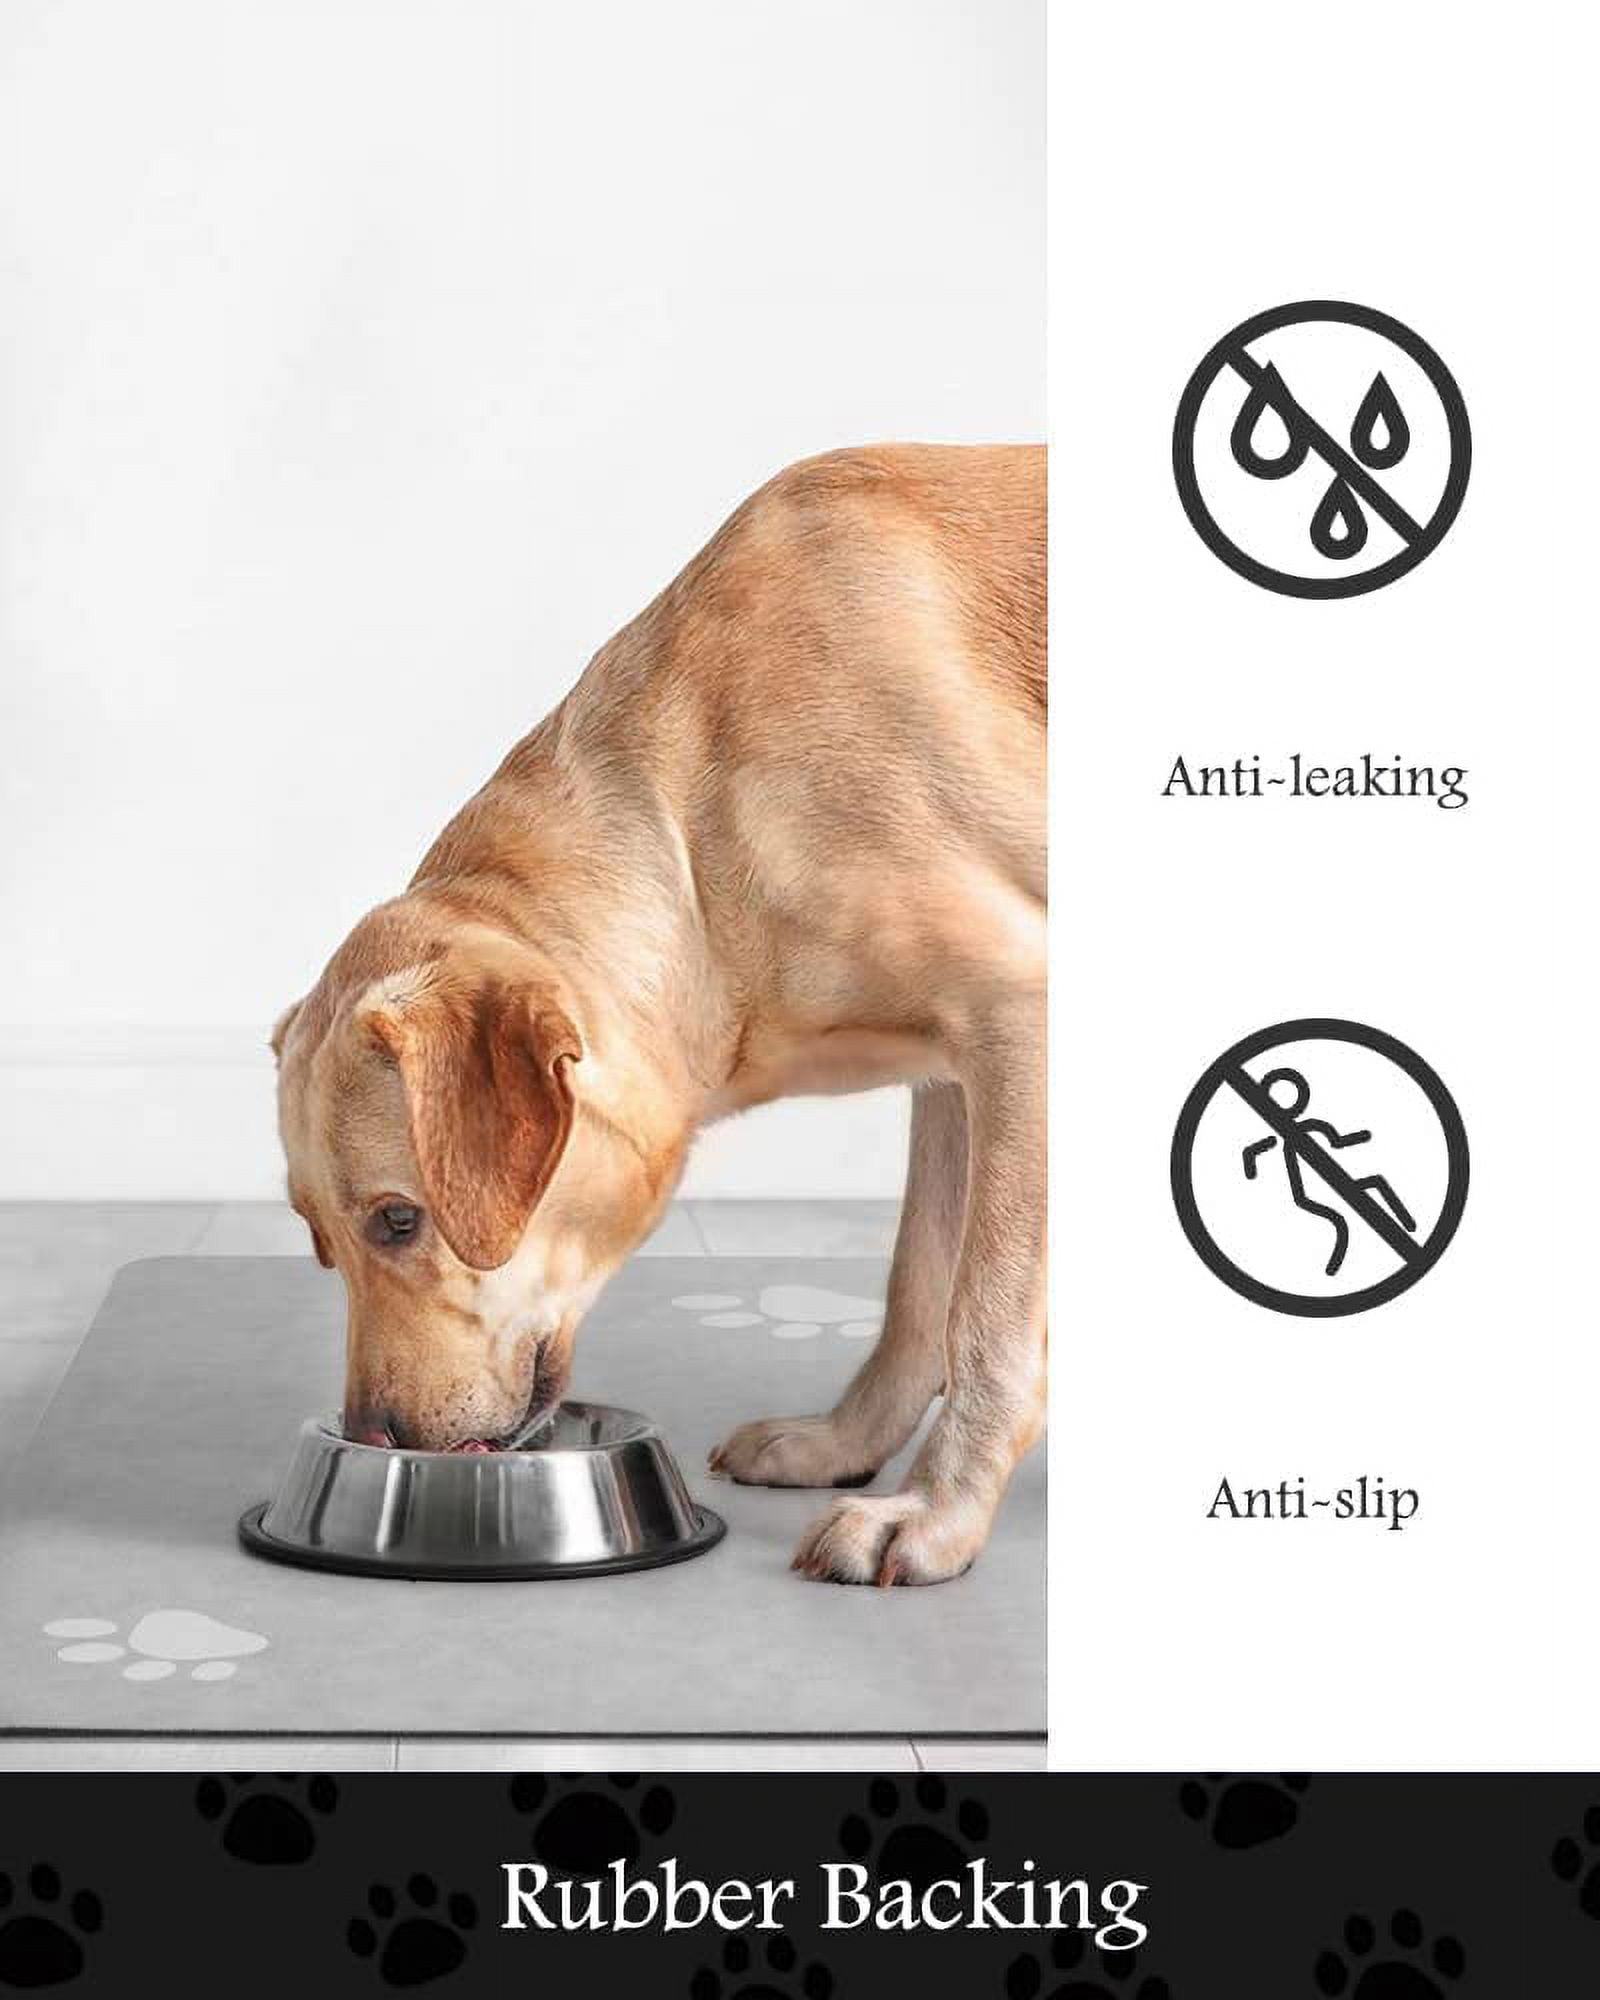 Paws & Pals Dog Food Mat - Anti-Slip Pet Feeding Mats, Multiple Sizes &  Colors